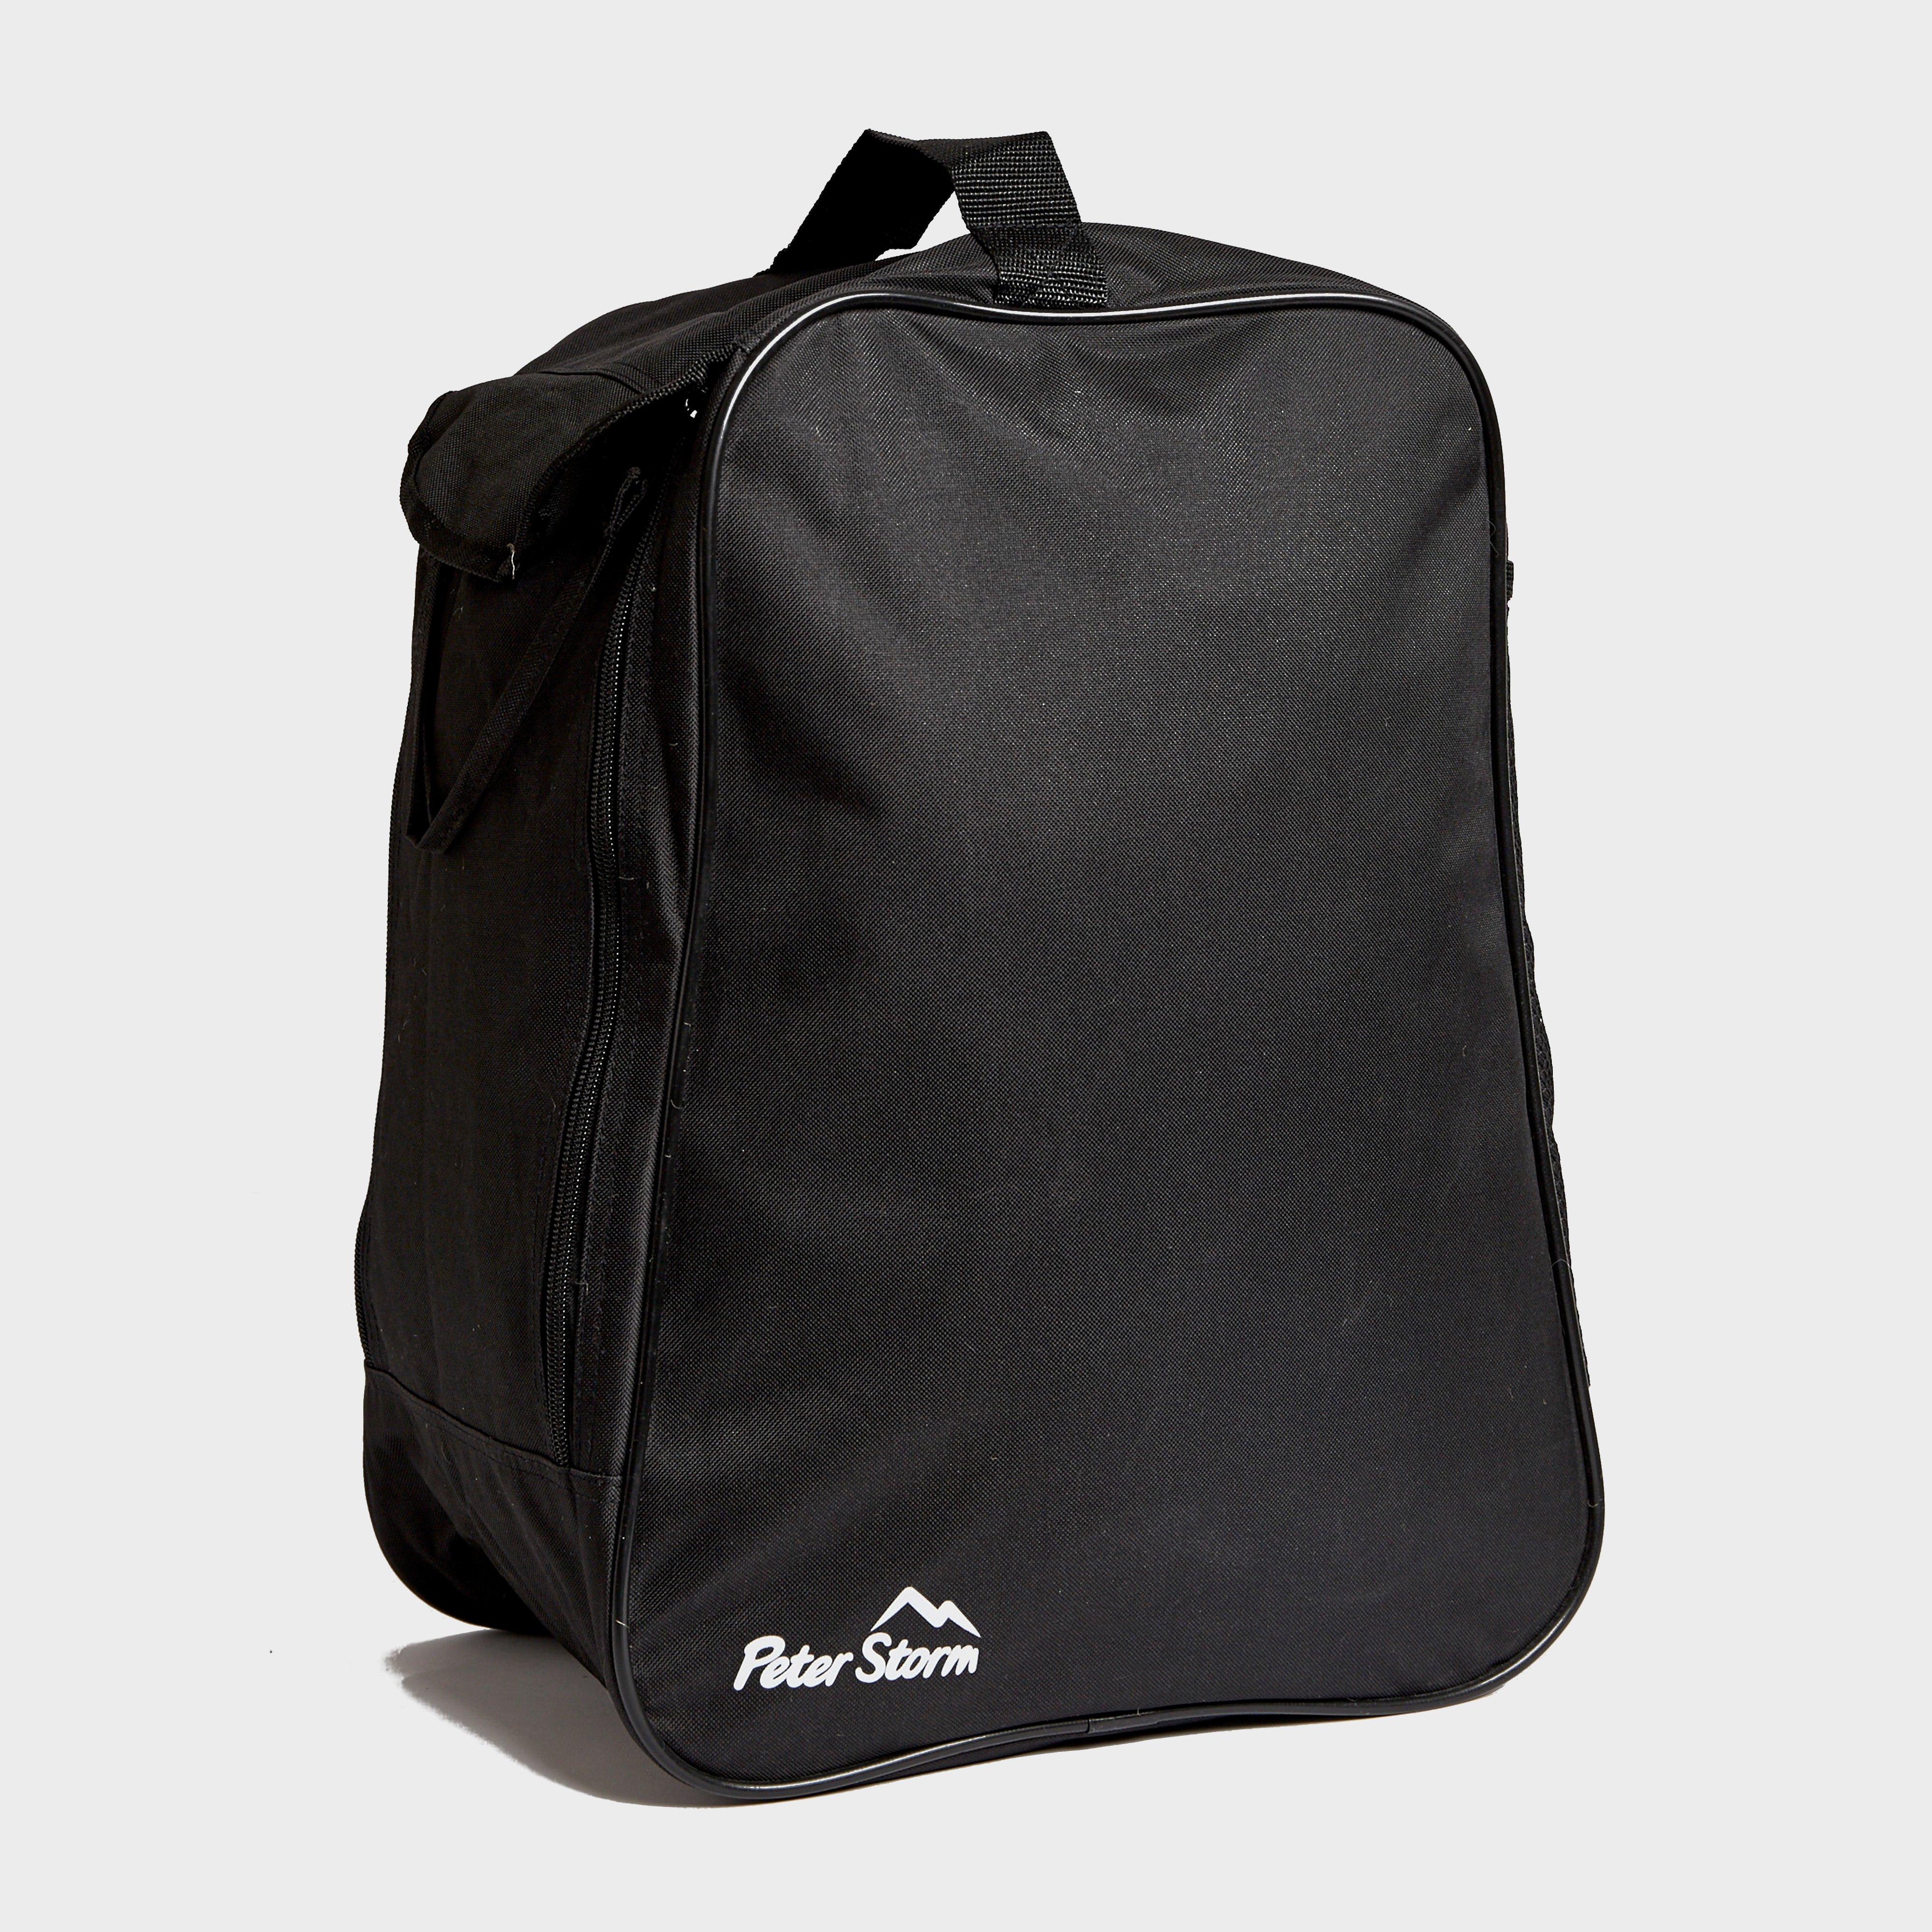 Peter Storm Wellington Boot Bag  Black